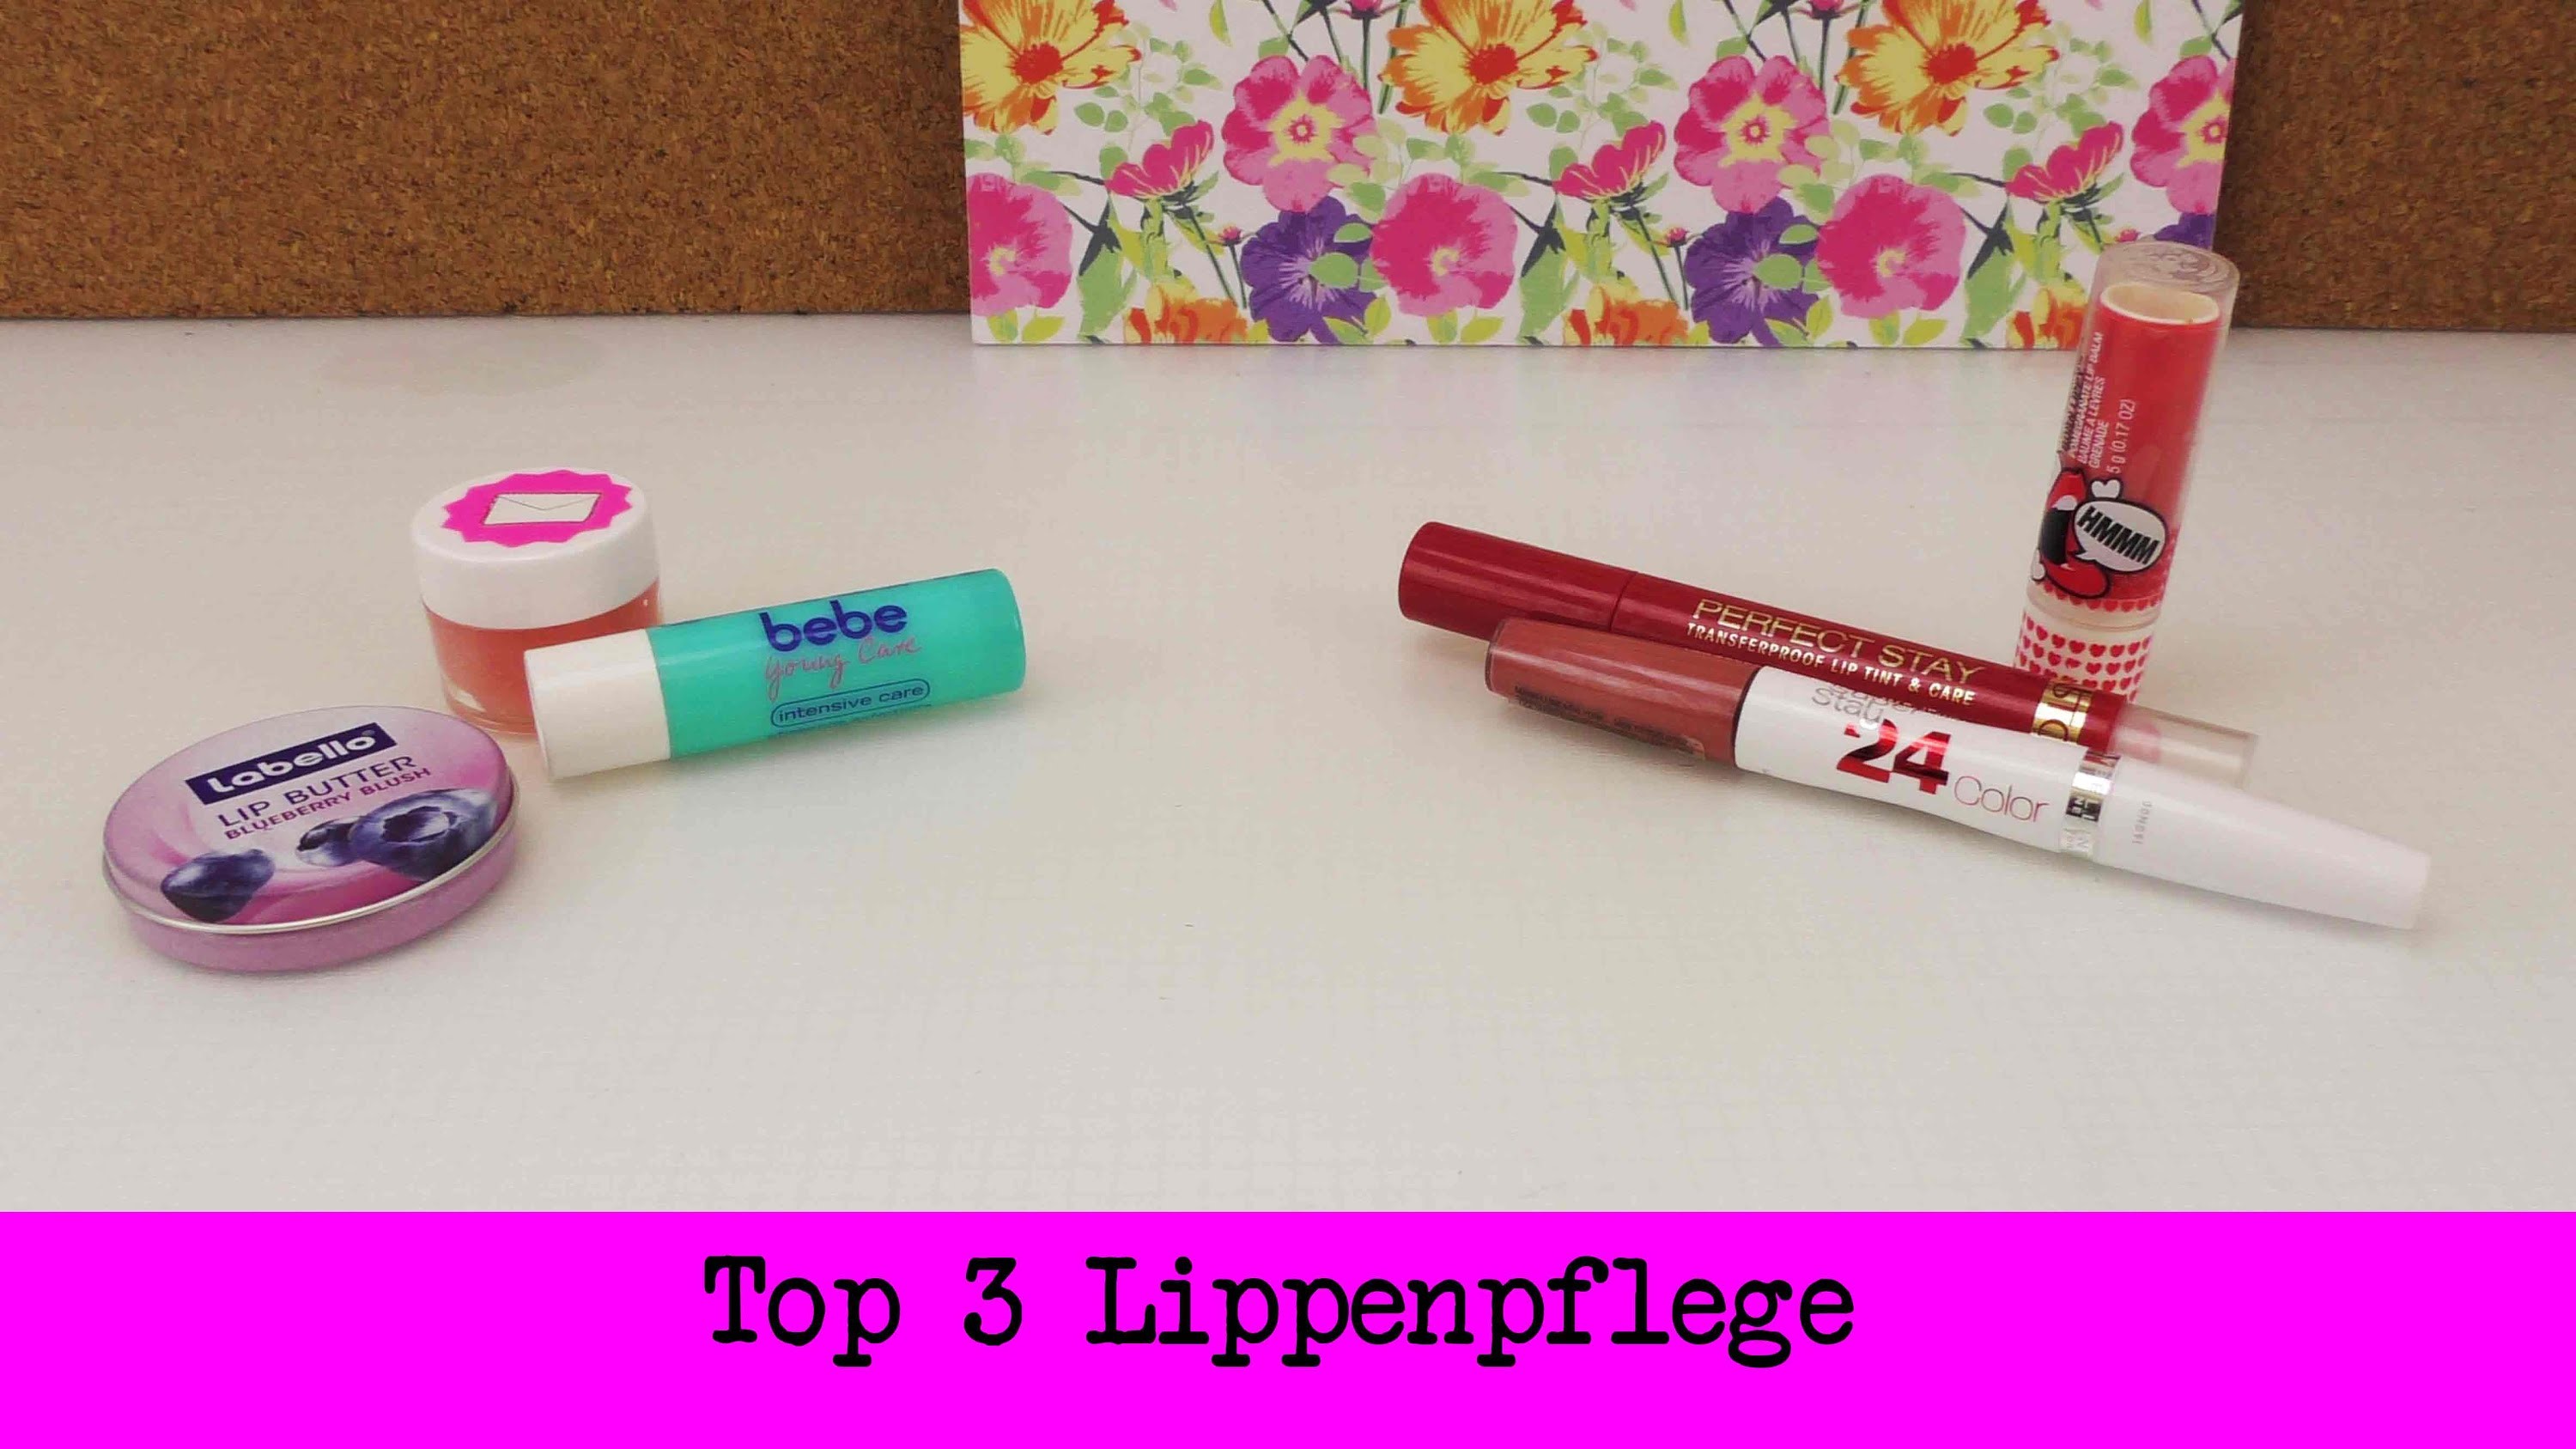 Top 3 Lippenpflege und Lippenstifte | DIY Inspiration | Evas & Kathis Lieblings Makeup Produkte